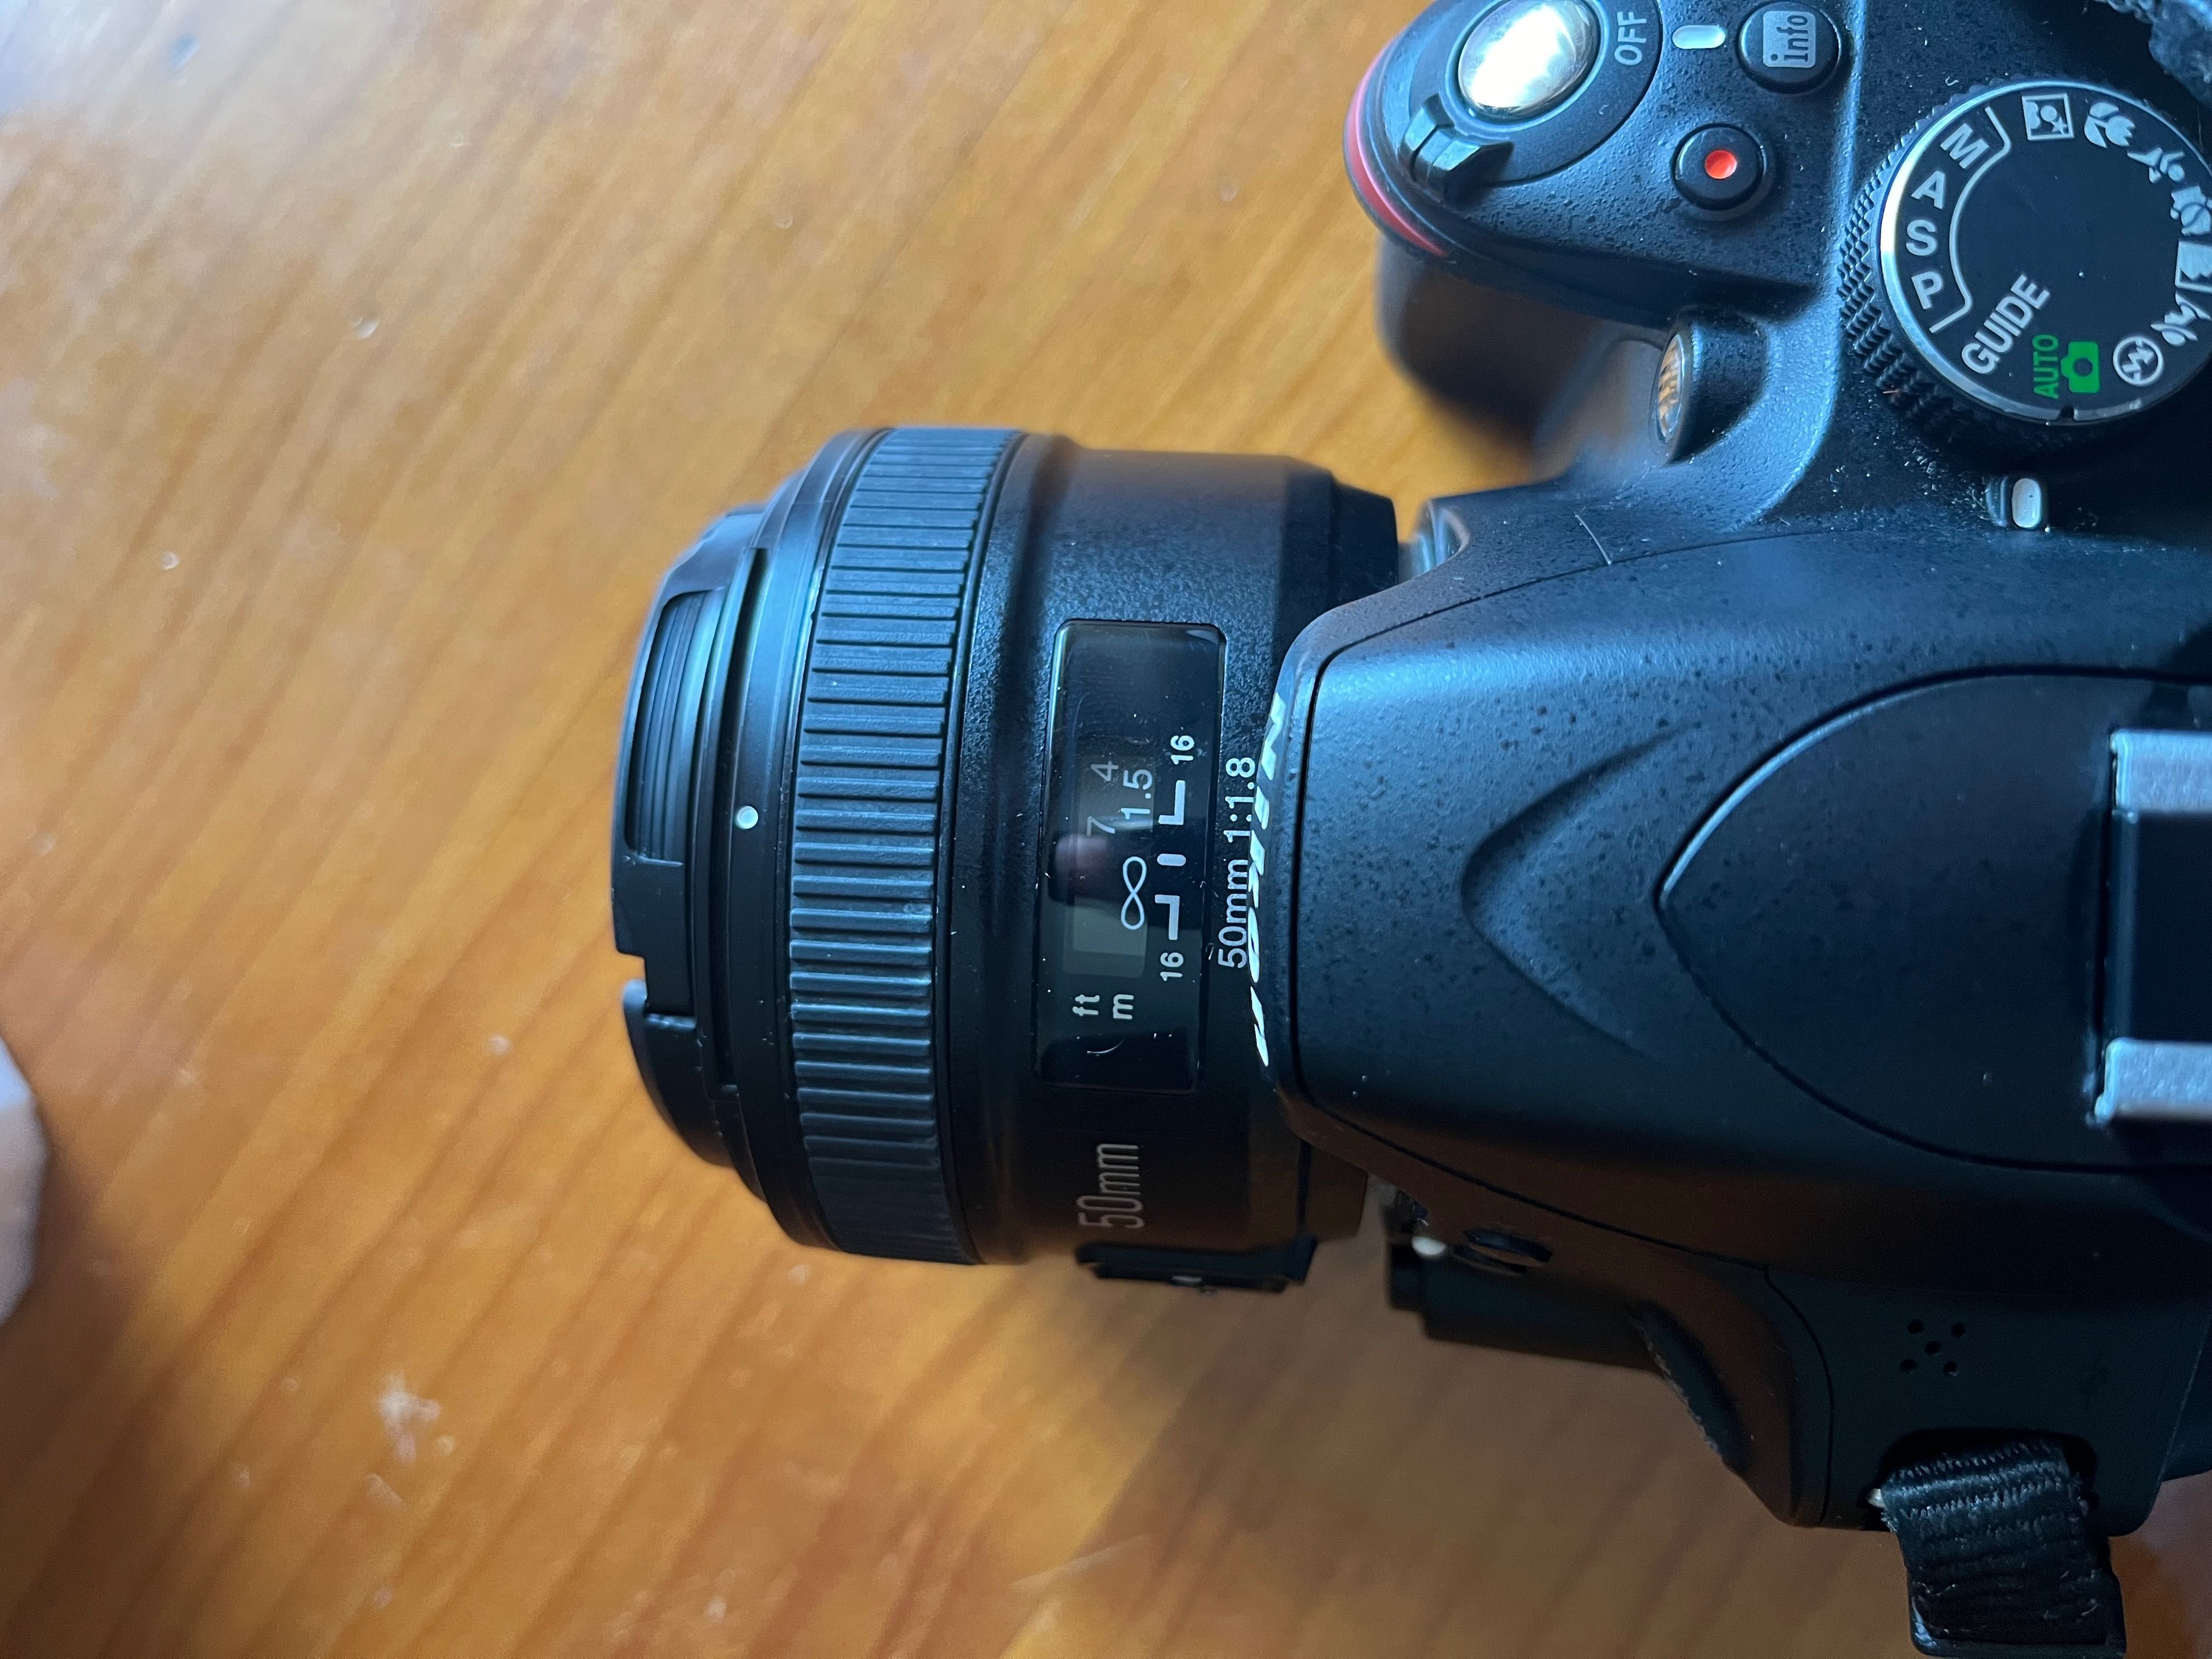 Maquina fotográfica Nikon3200D+estojo + objetivas: 18-55mm & 50mm f1.8